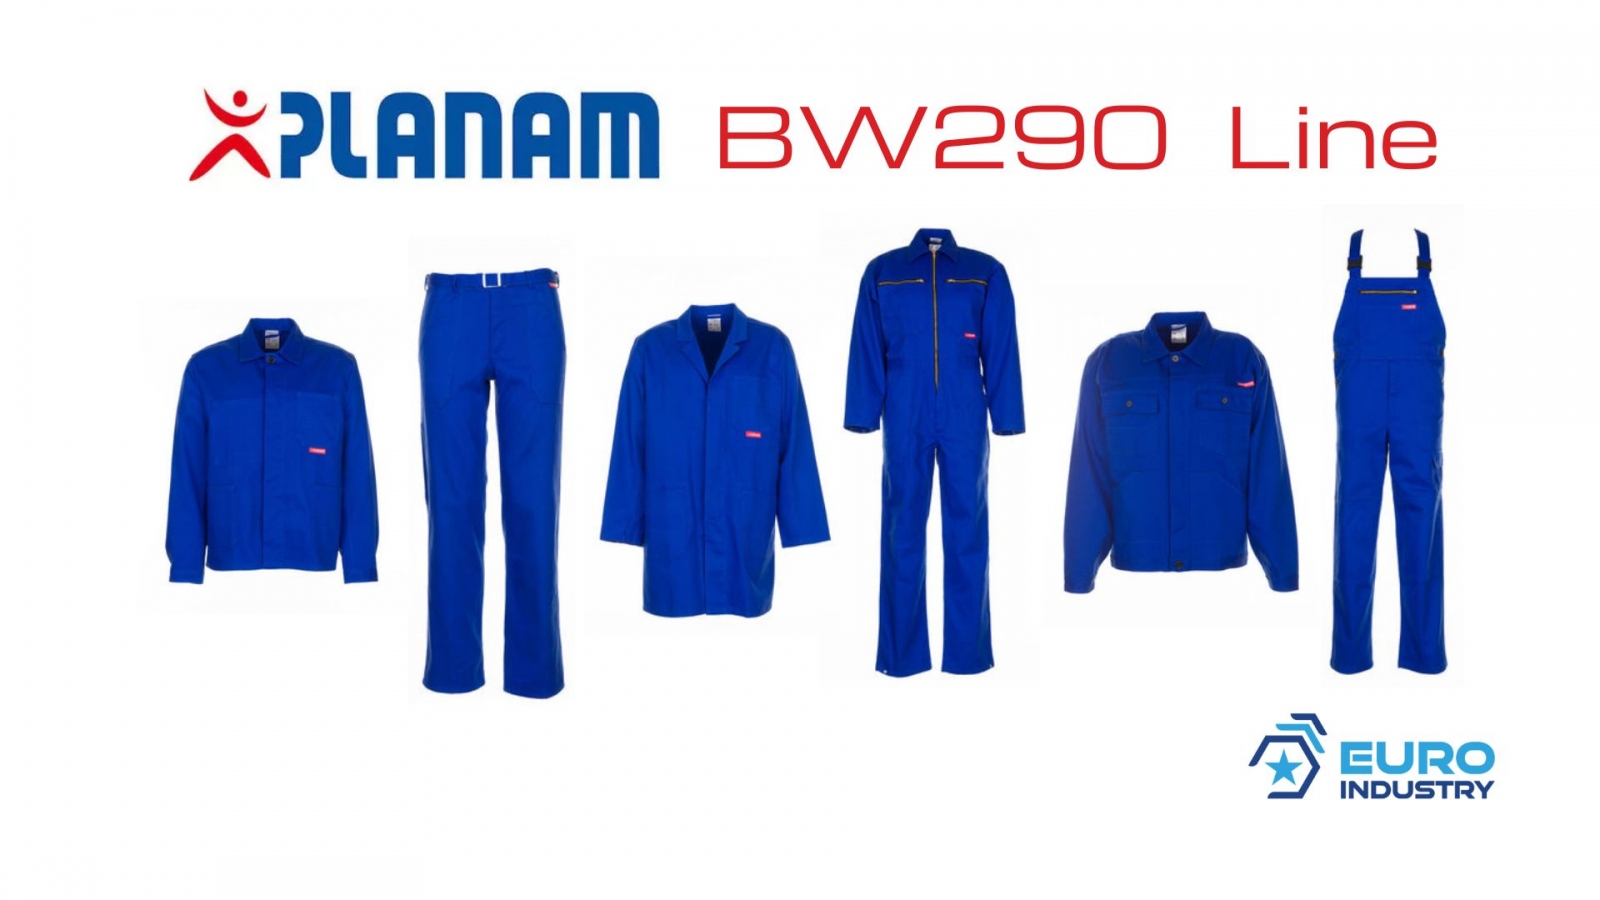 pics/Planam/0126/planam-bw-290-linie-kornblau-baumwolle-details.jpg